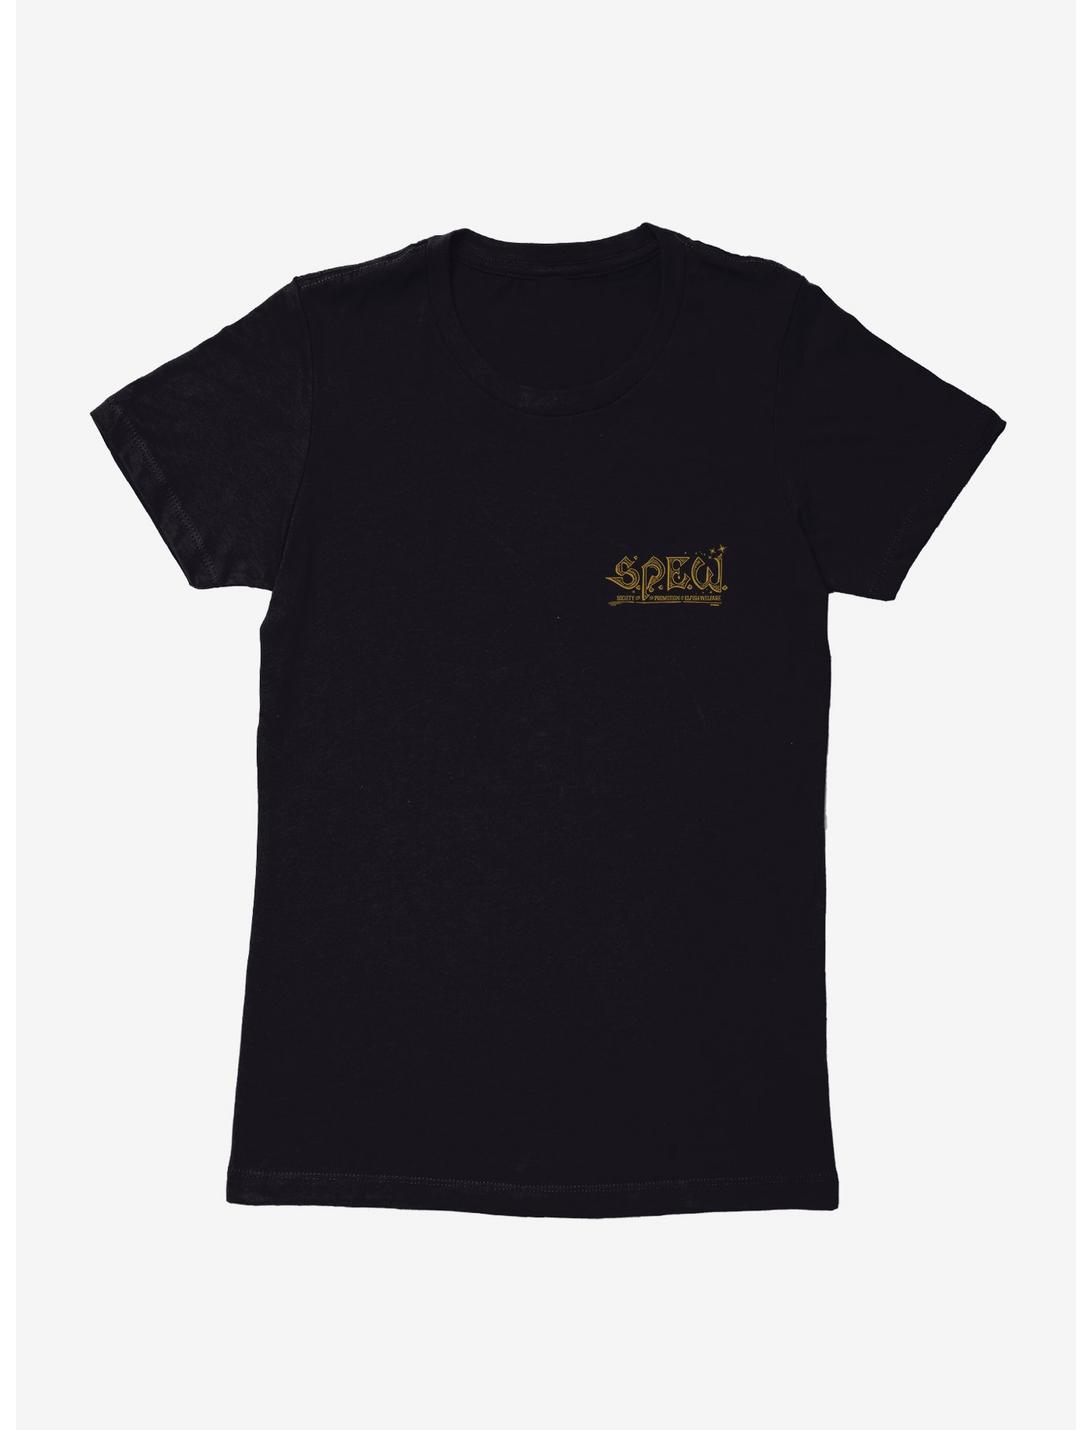 Harry Potter S.P.E.W. Organization Gold Text Womens T-Shirt, BLACK, hi-res